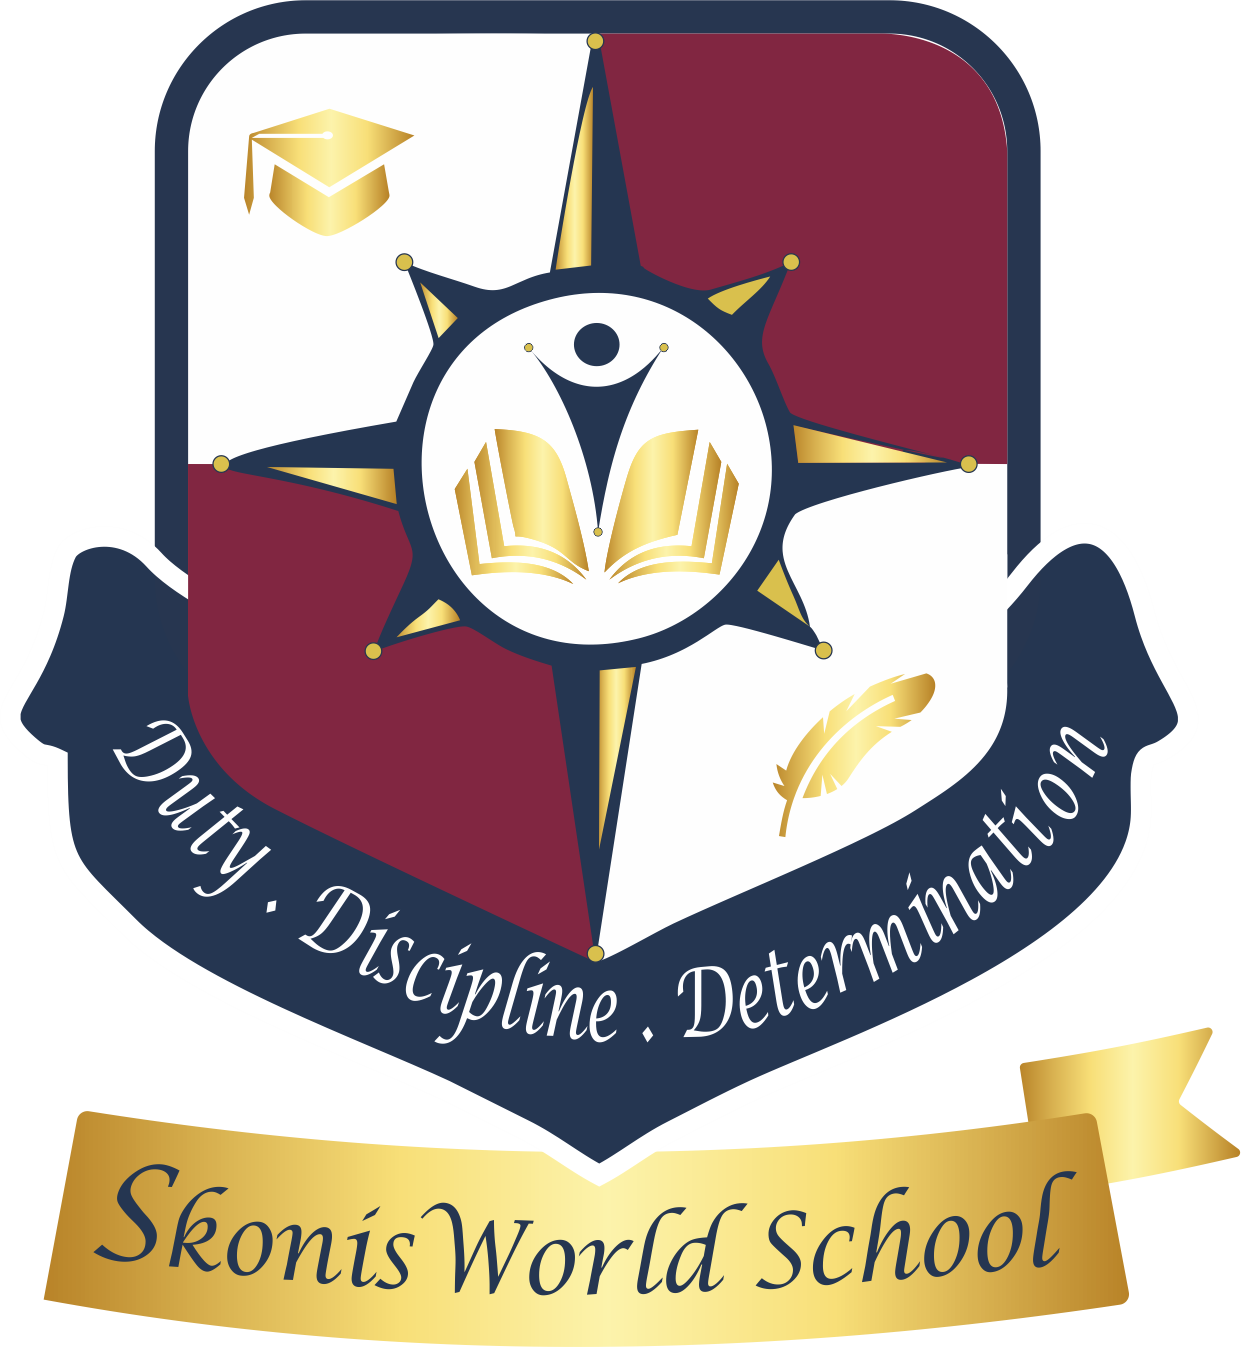 Skonis World School